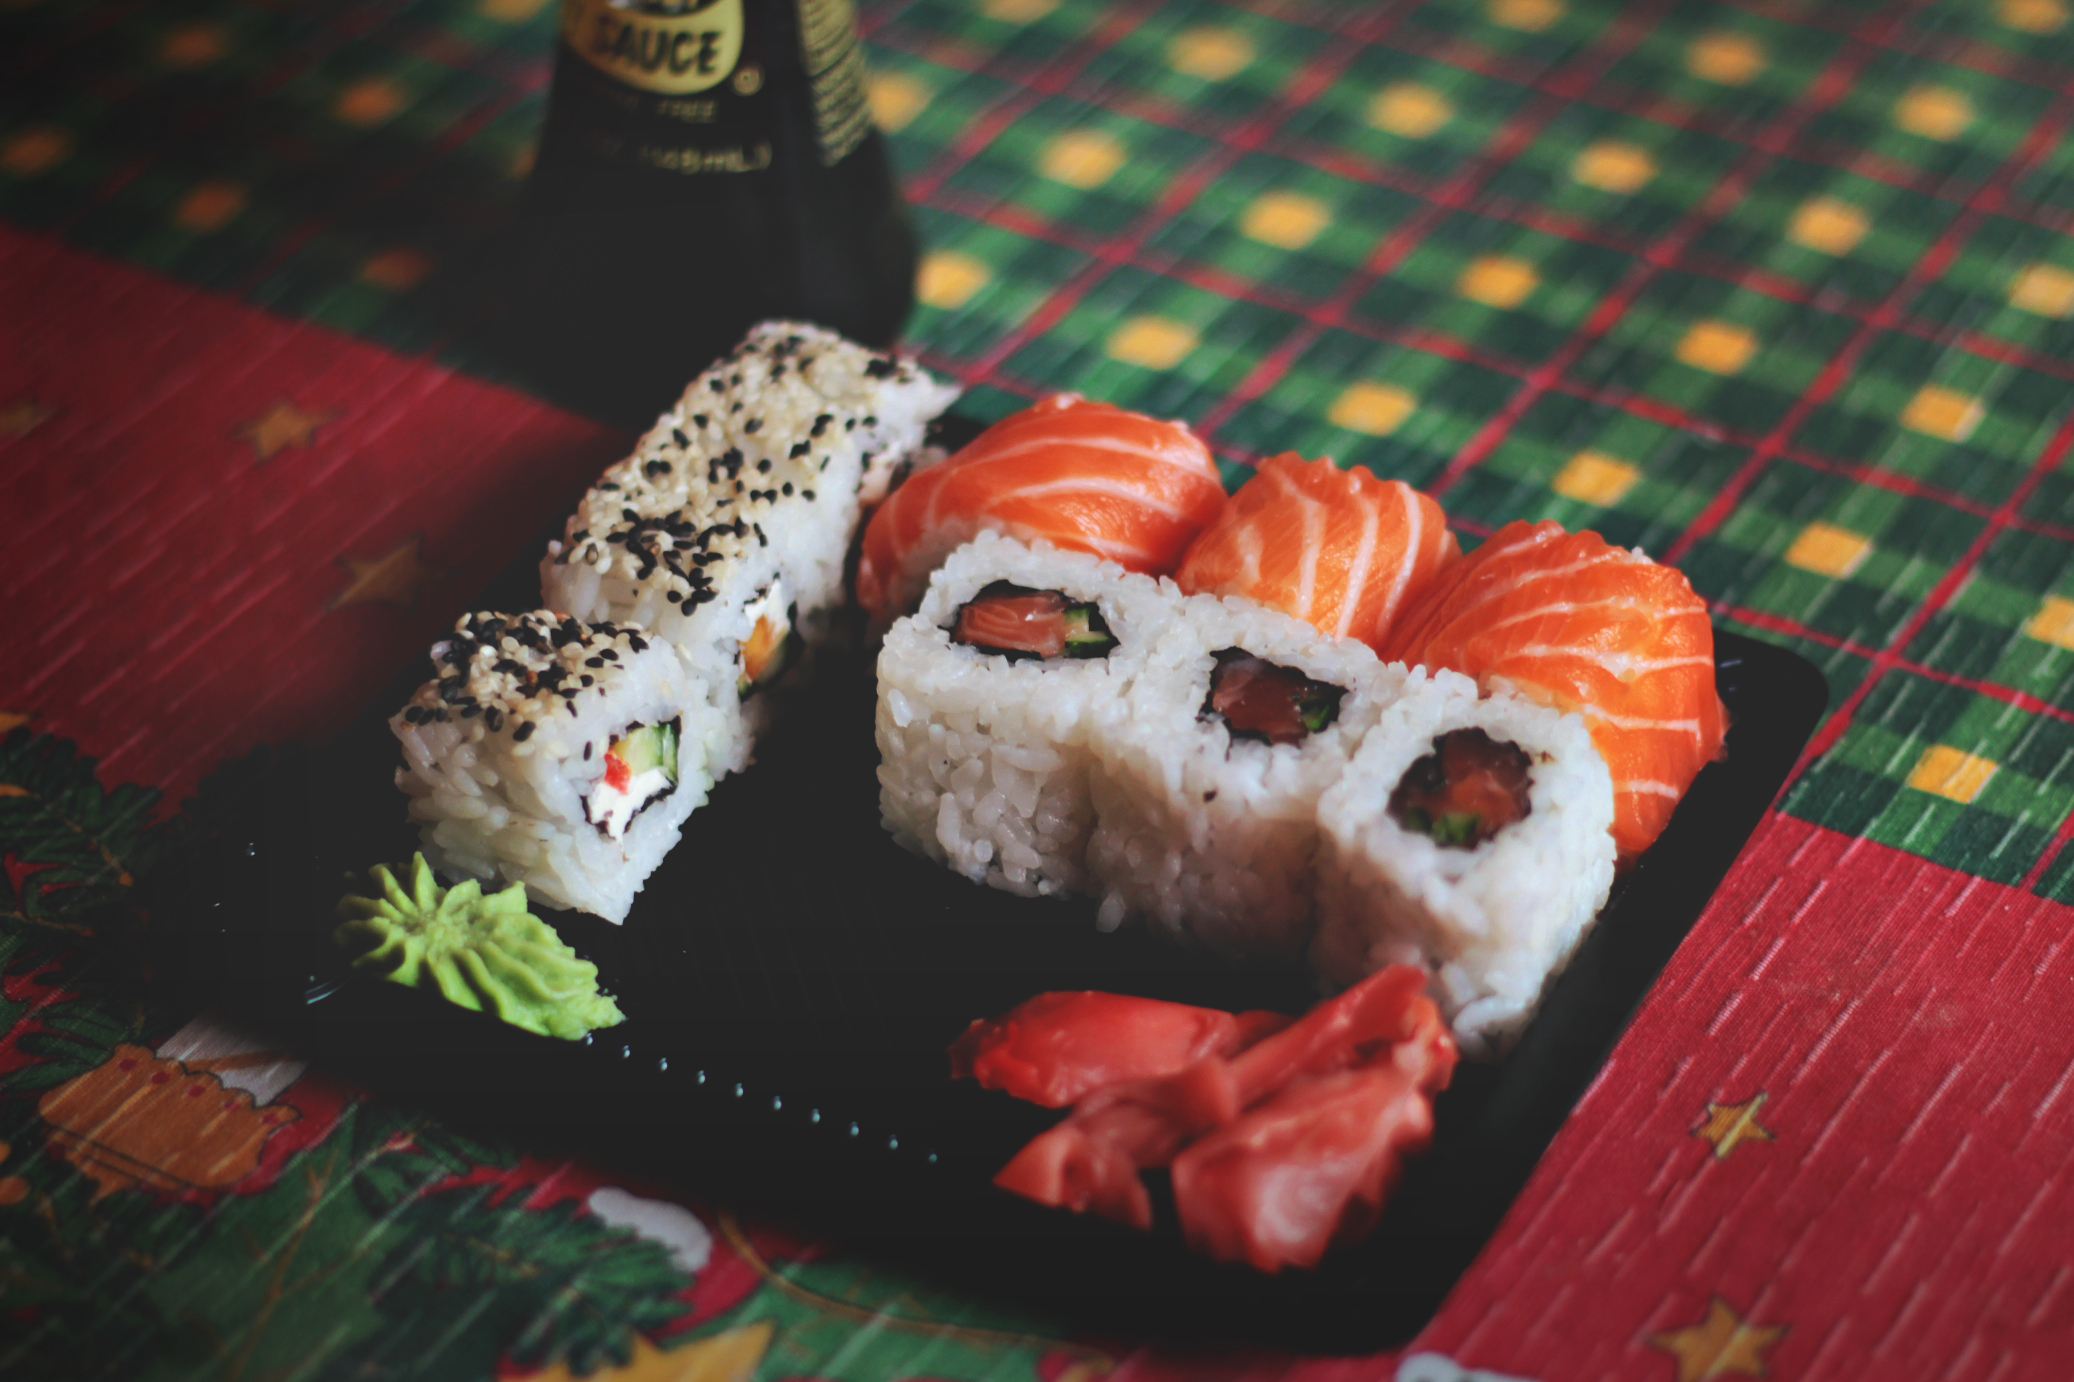 еда суши роллы японская кухня япония food sushi rolls Japanese kitchen Japan без смс